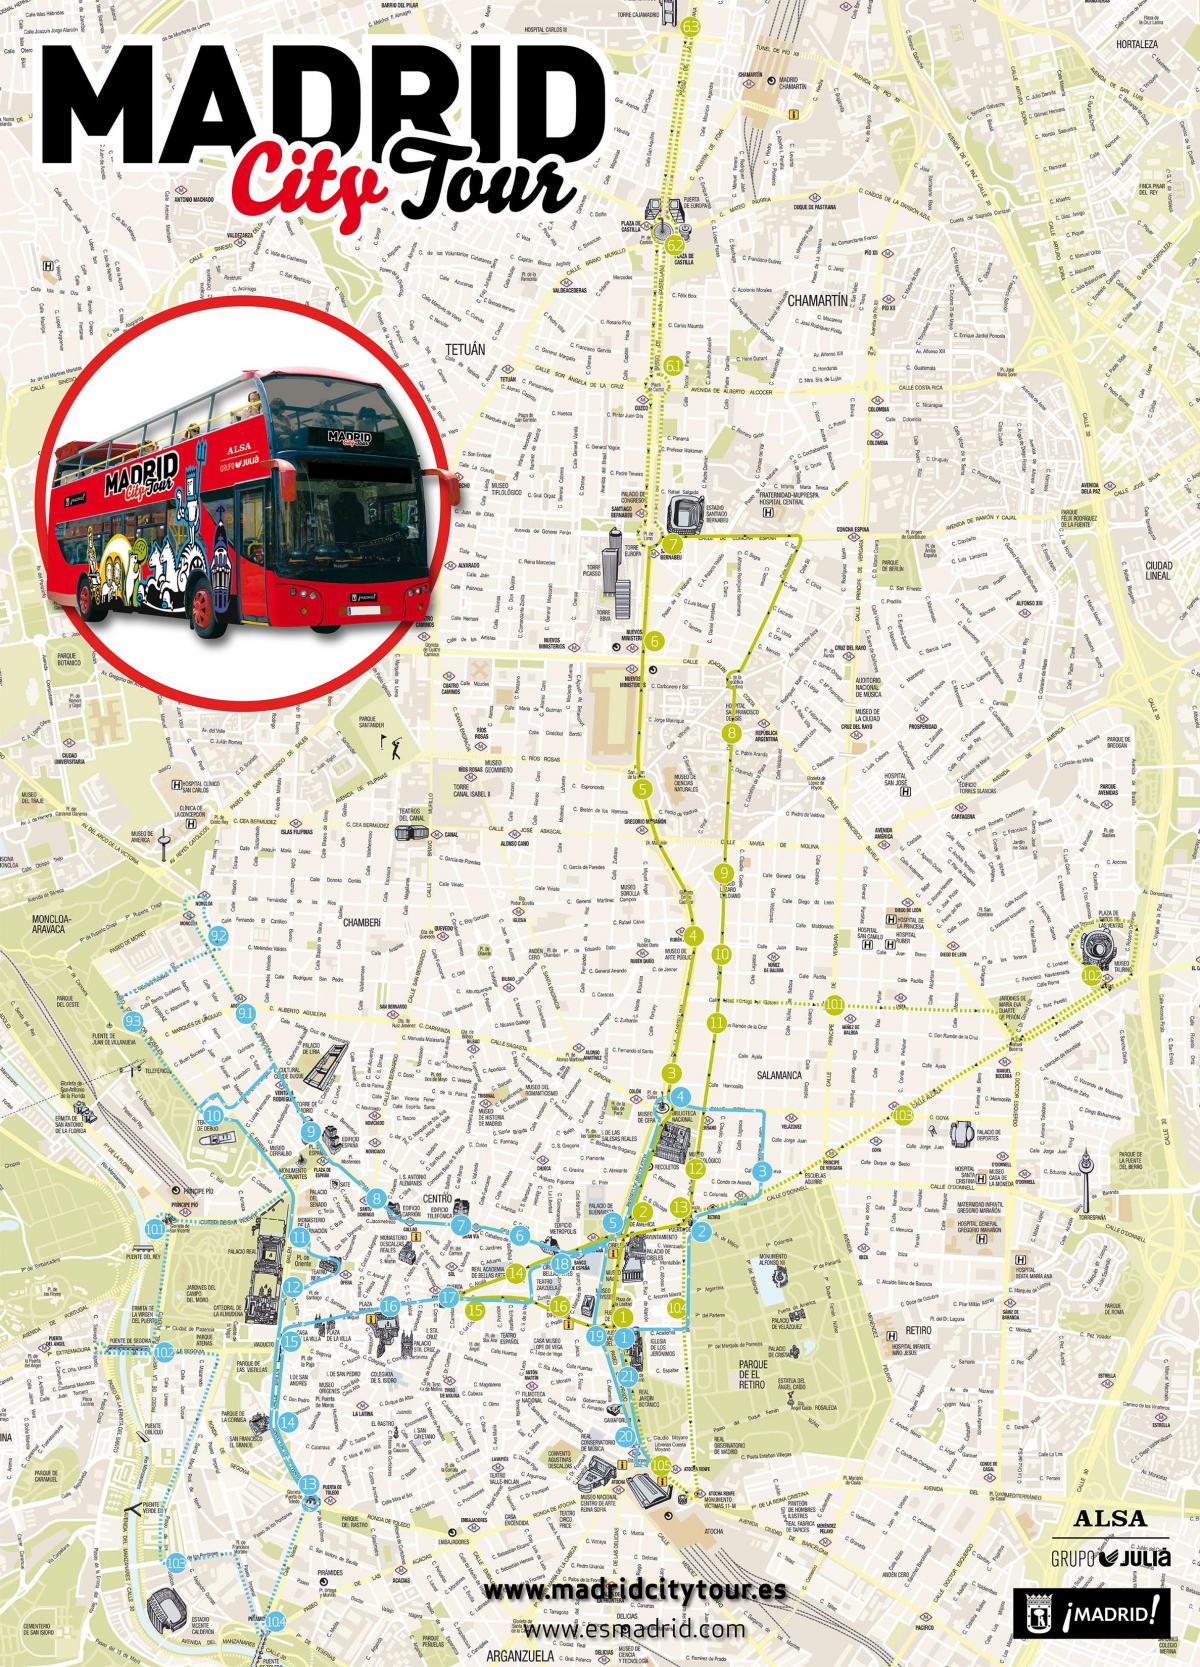 Madrid sightseeing bus map